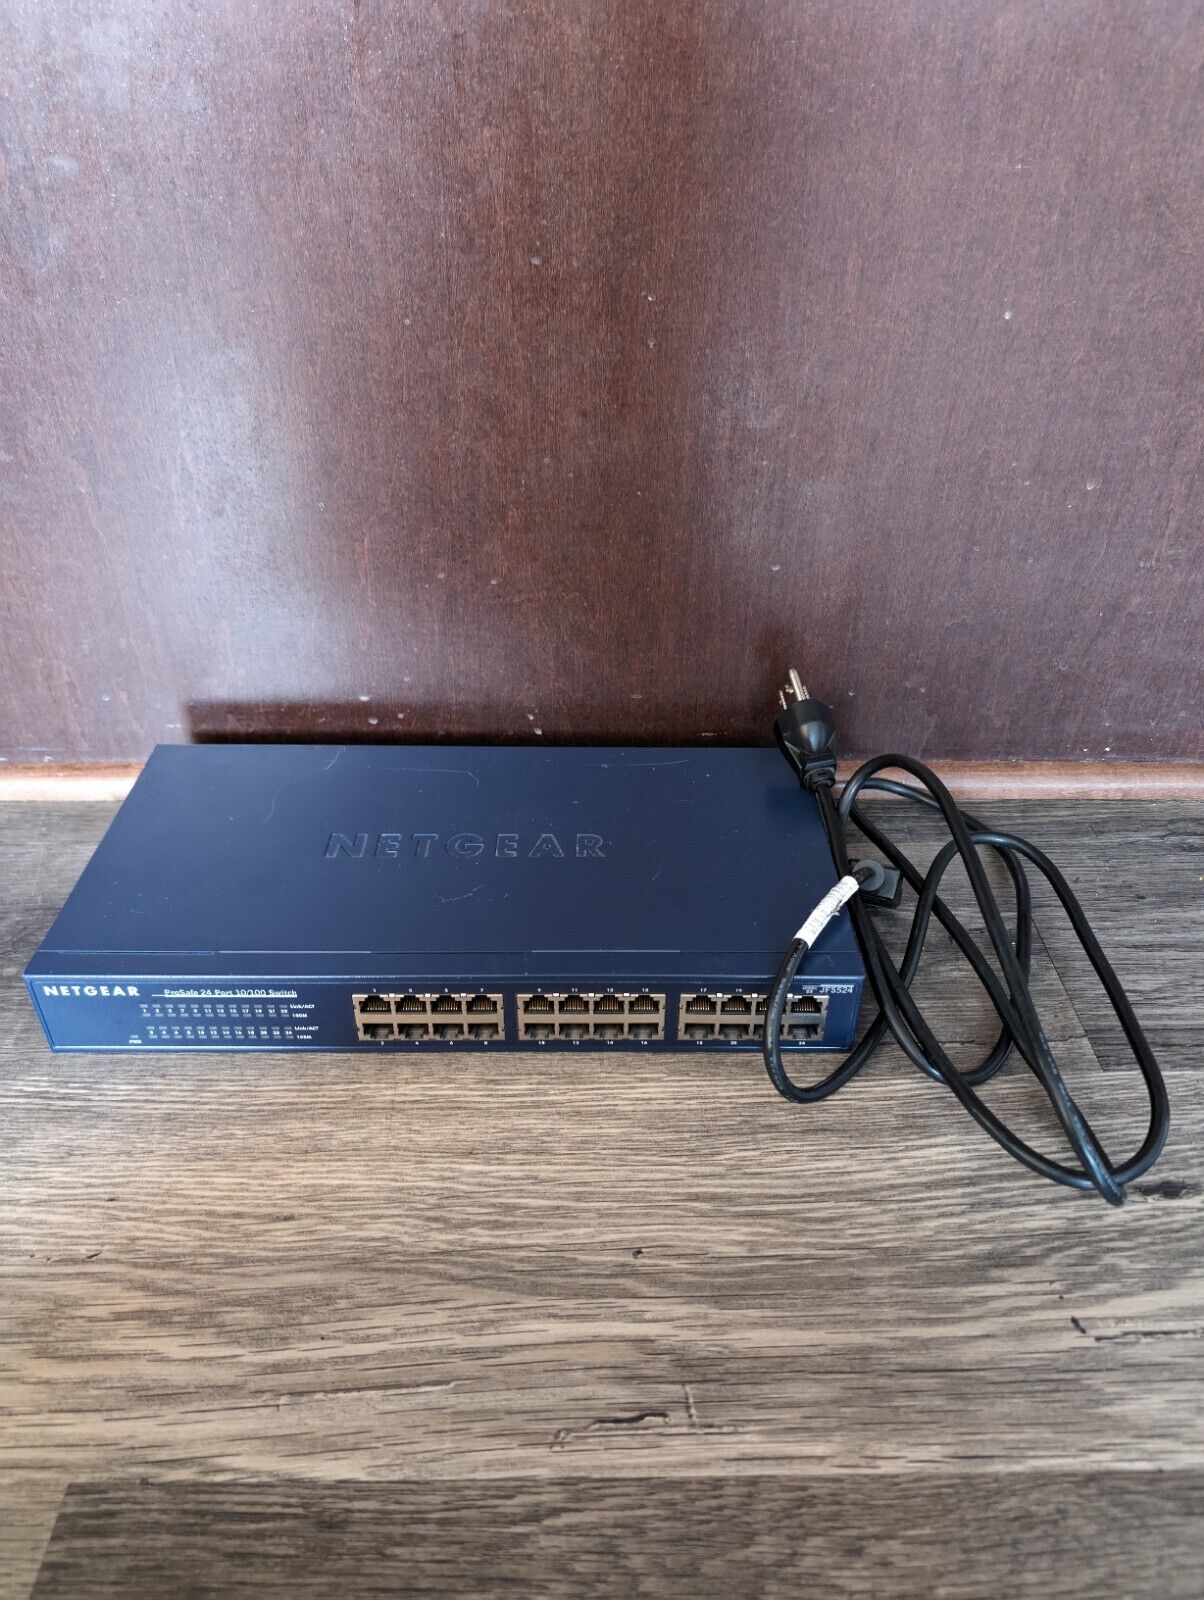 Netgear JFS524 ProSafe 24 Port 10/100 Unmanaged Network Switch, Tested and Works